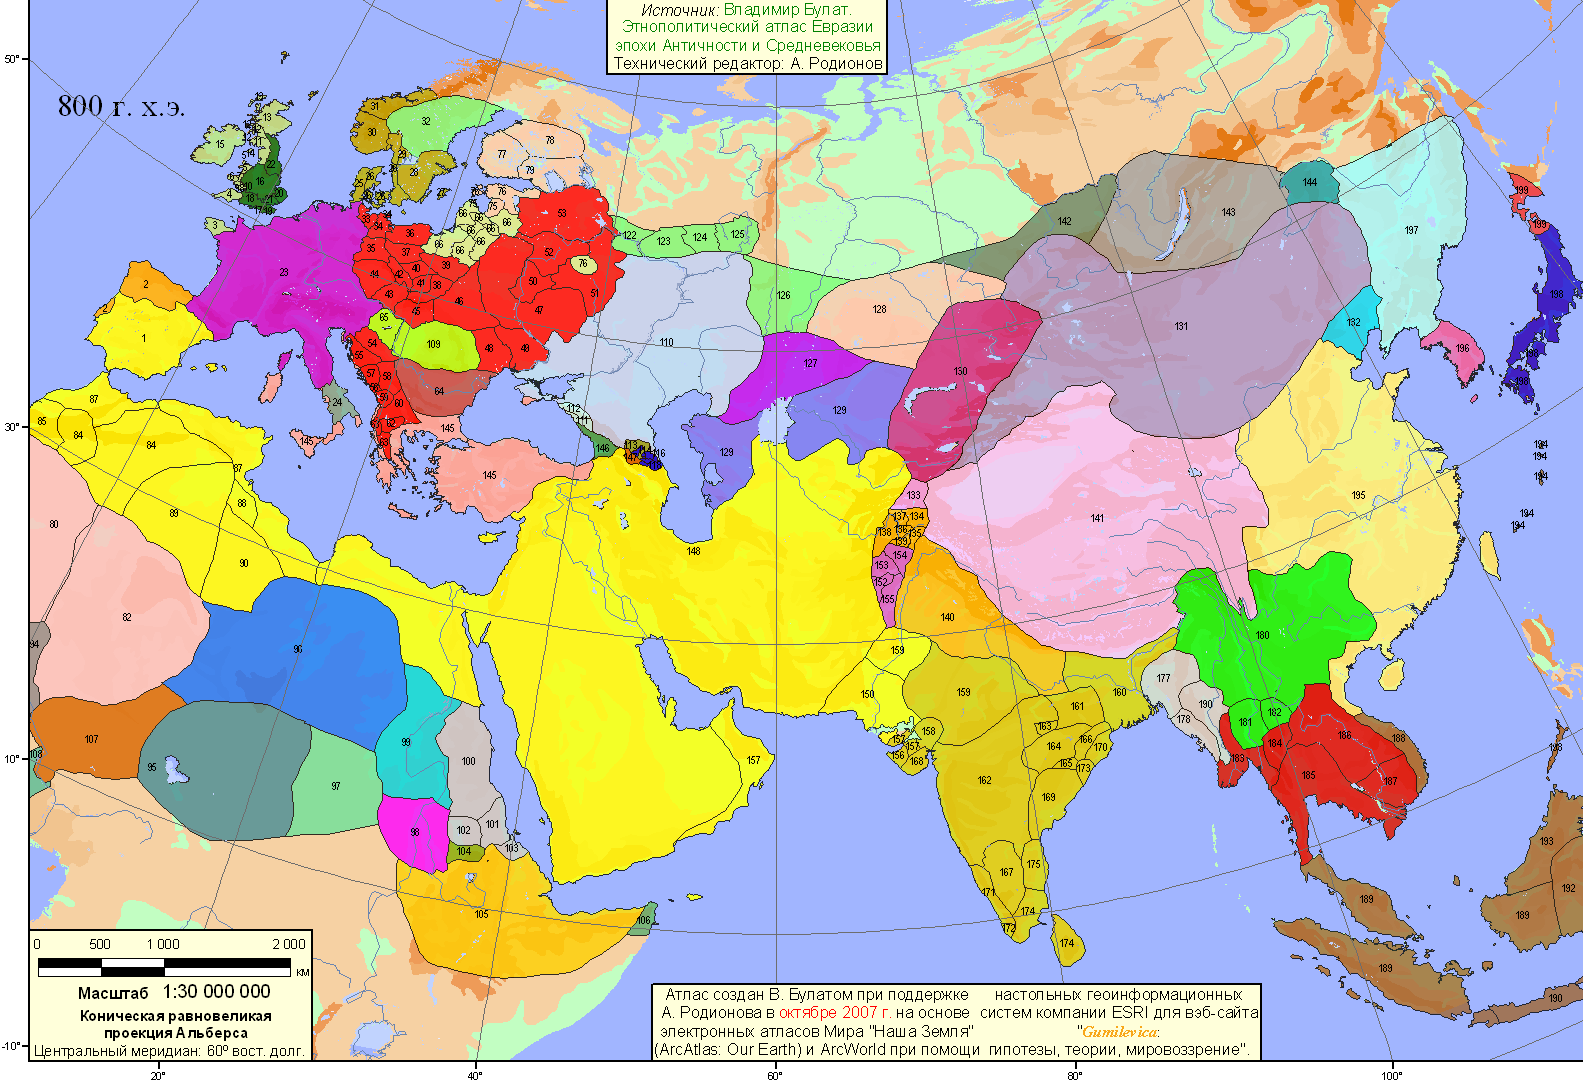 Eurasia - 800 AD (325 Kbytes)